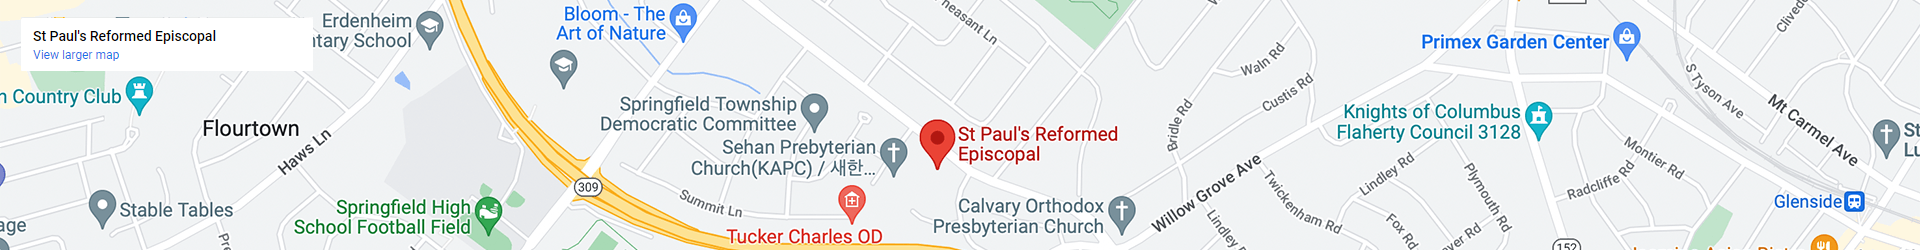 Saint Paul's Reformed Episcopal Church